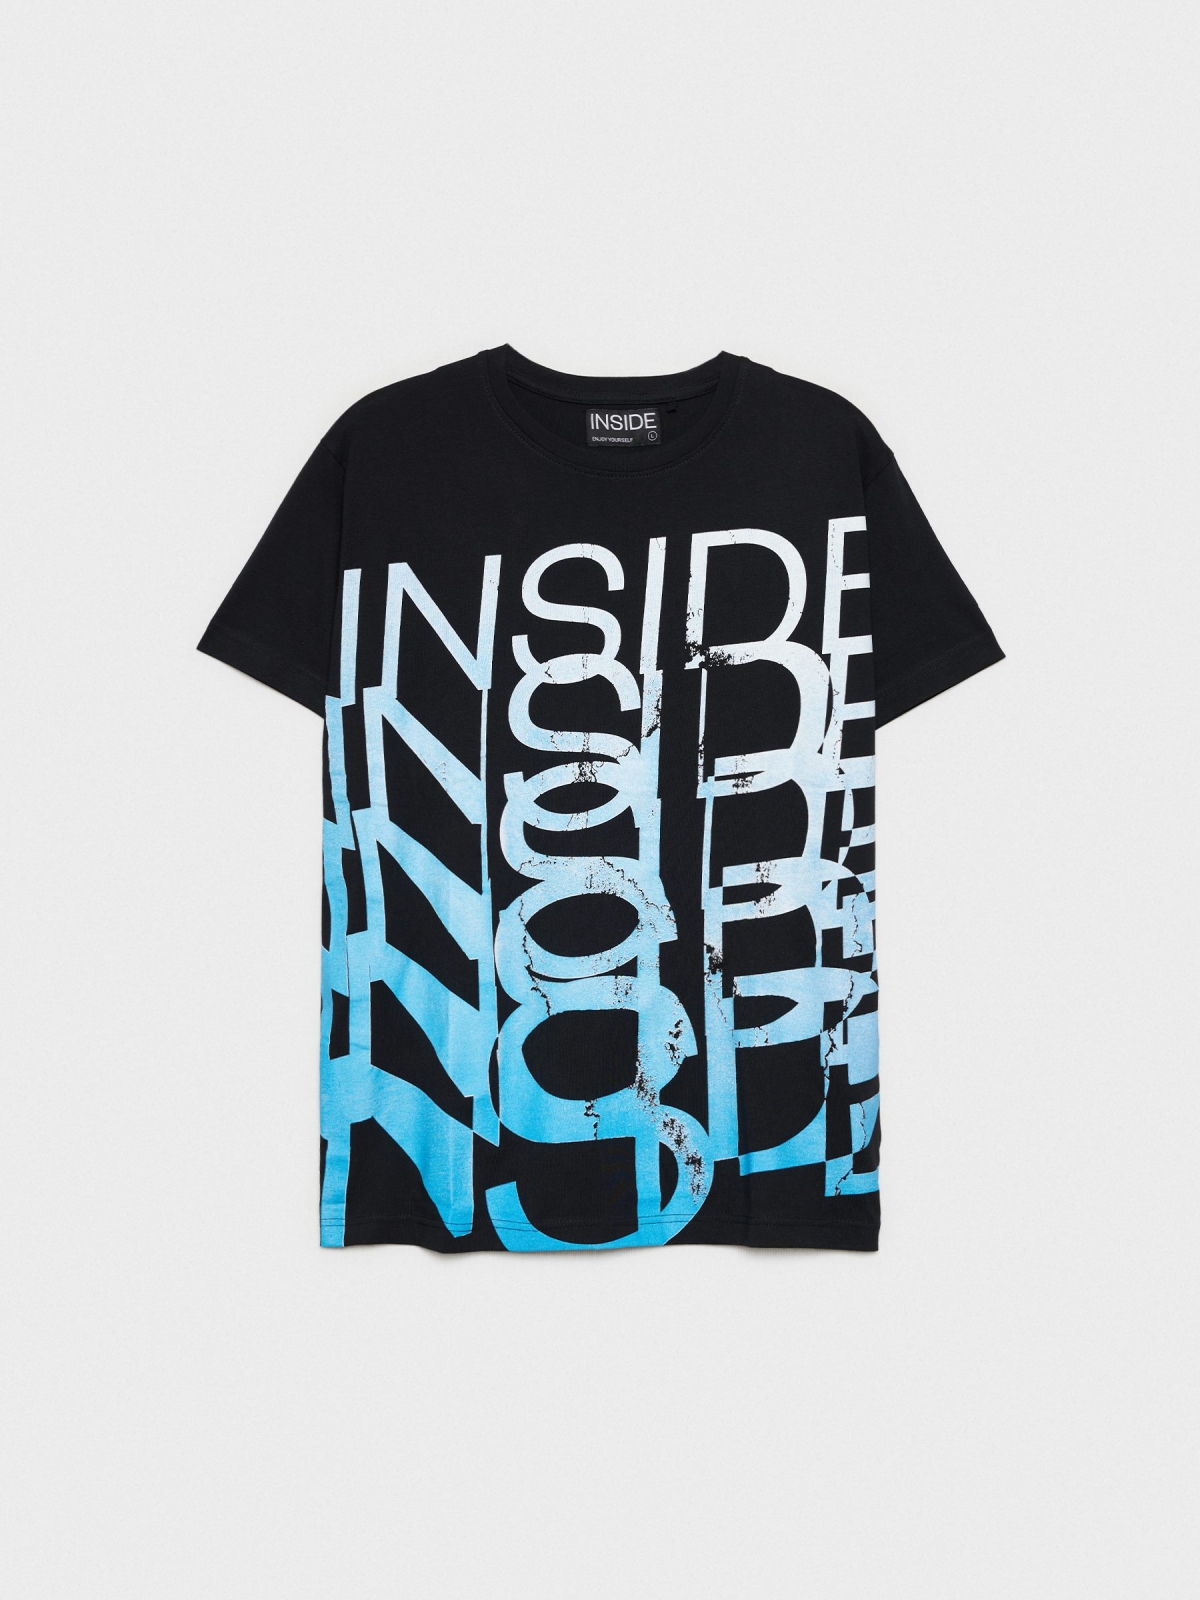  INSIDE print T-shirt black